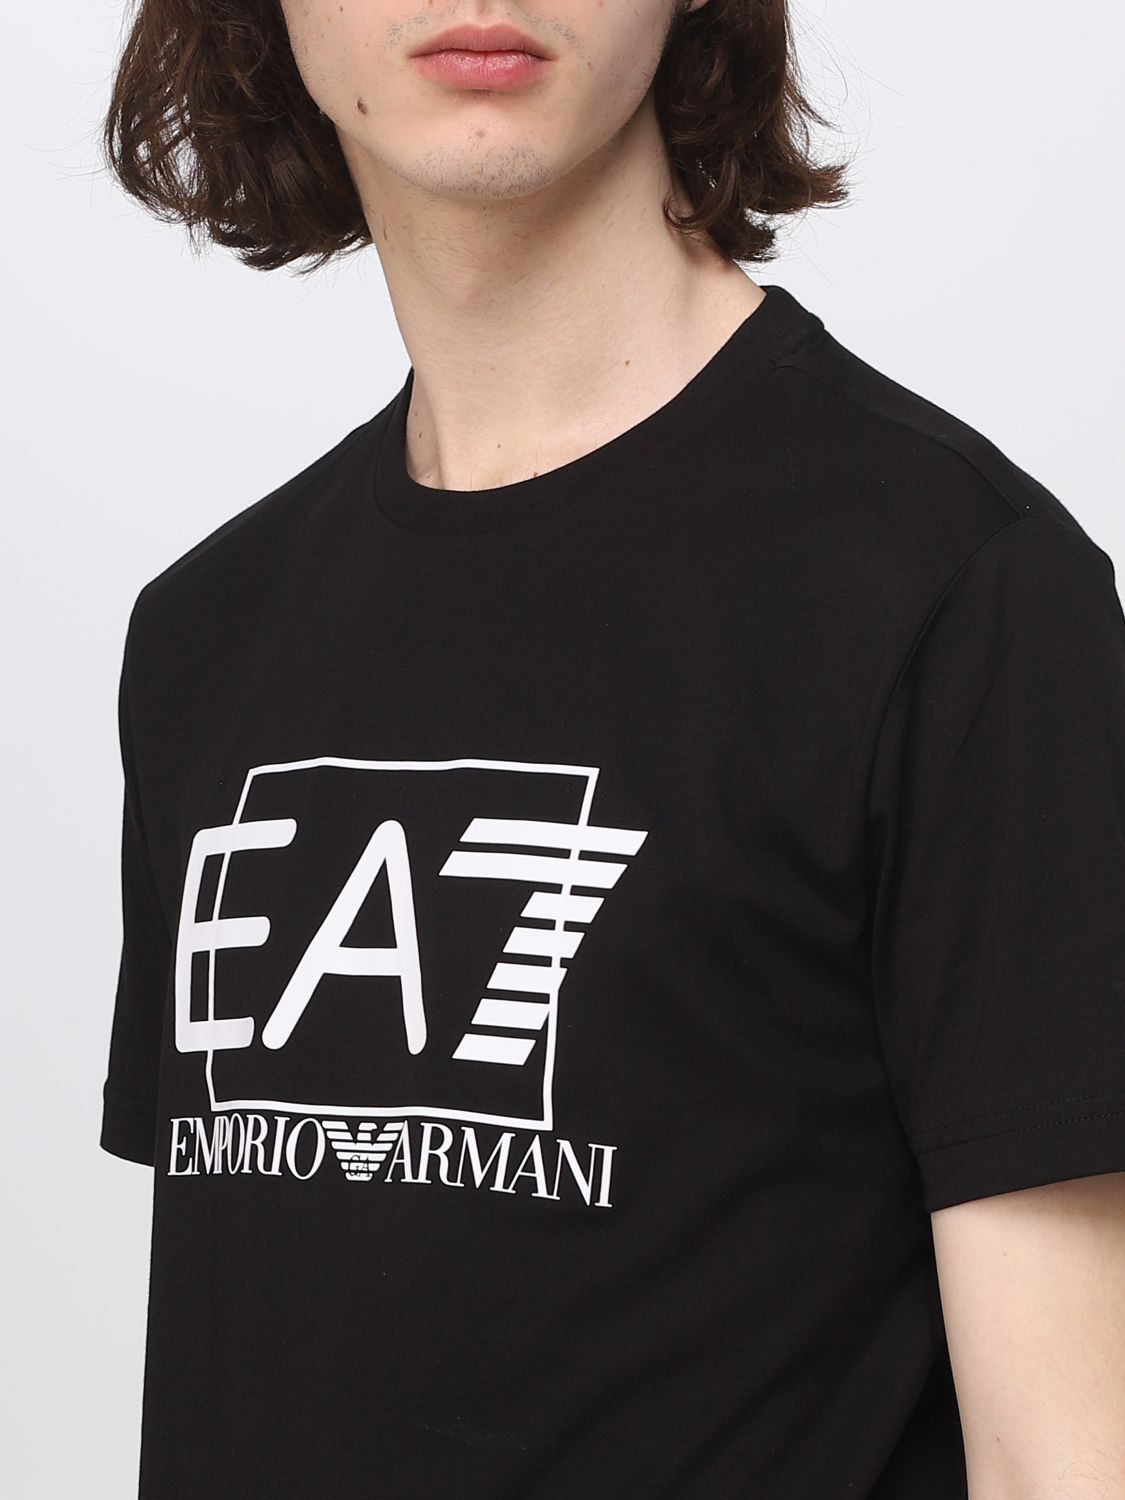 hanger Glimlach George Stevenson EA7: t-shirt for man - Black | Ea7 t-shirt 3RPT81PJM9Z online on GIGLIO.COM